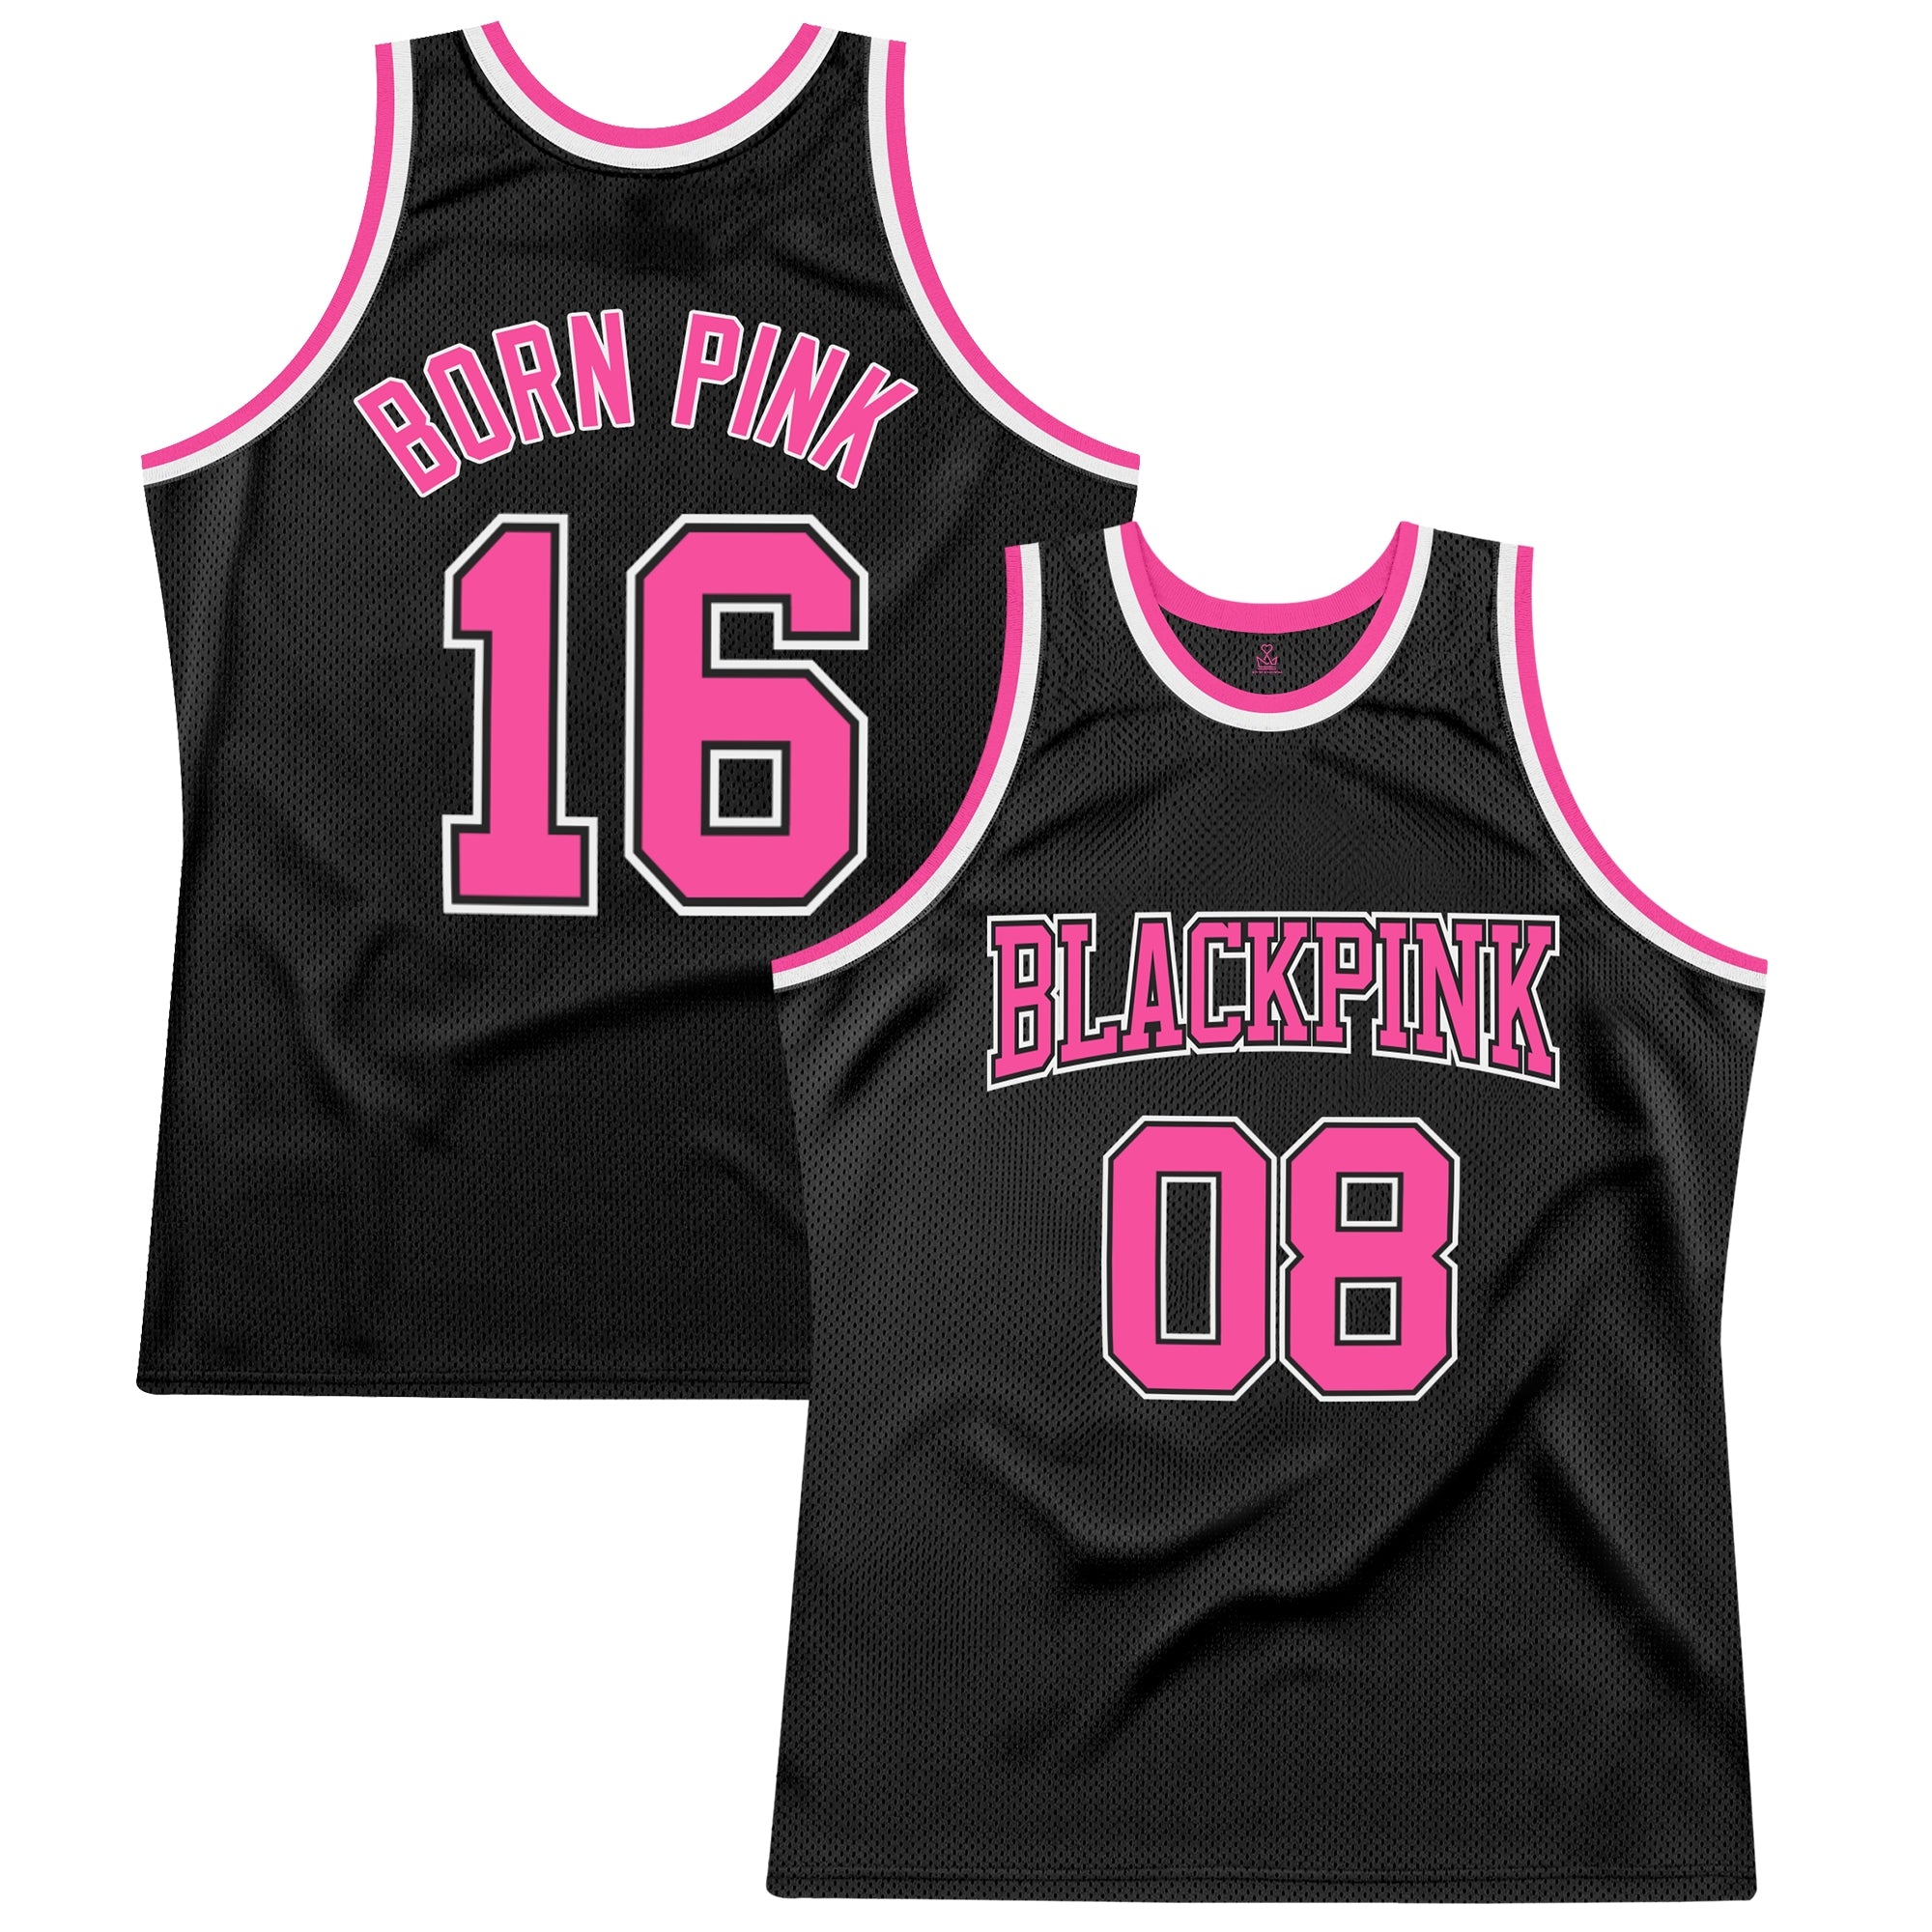 Blackpink - Born Pink Basketball Jersey